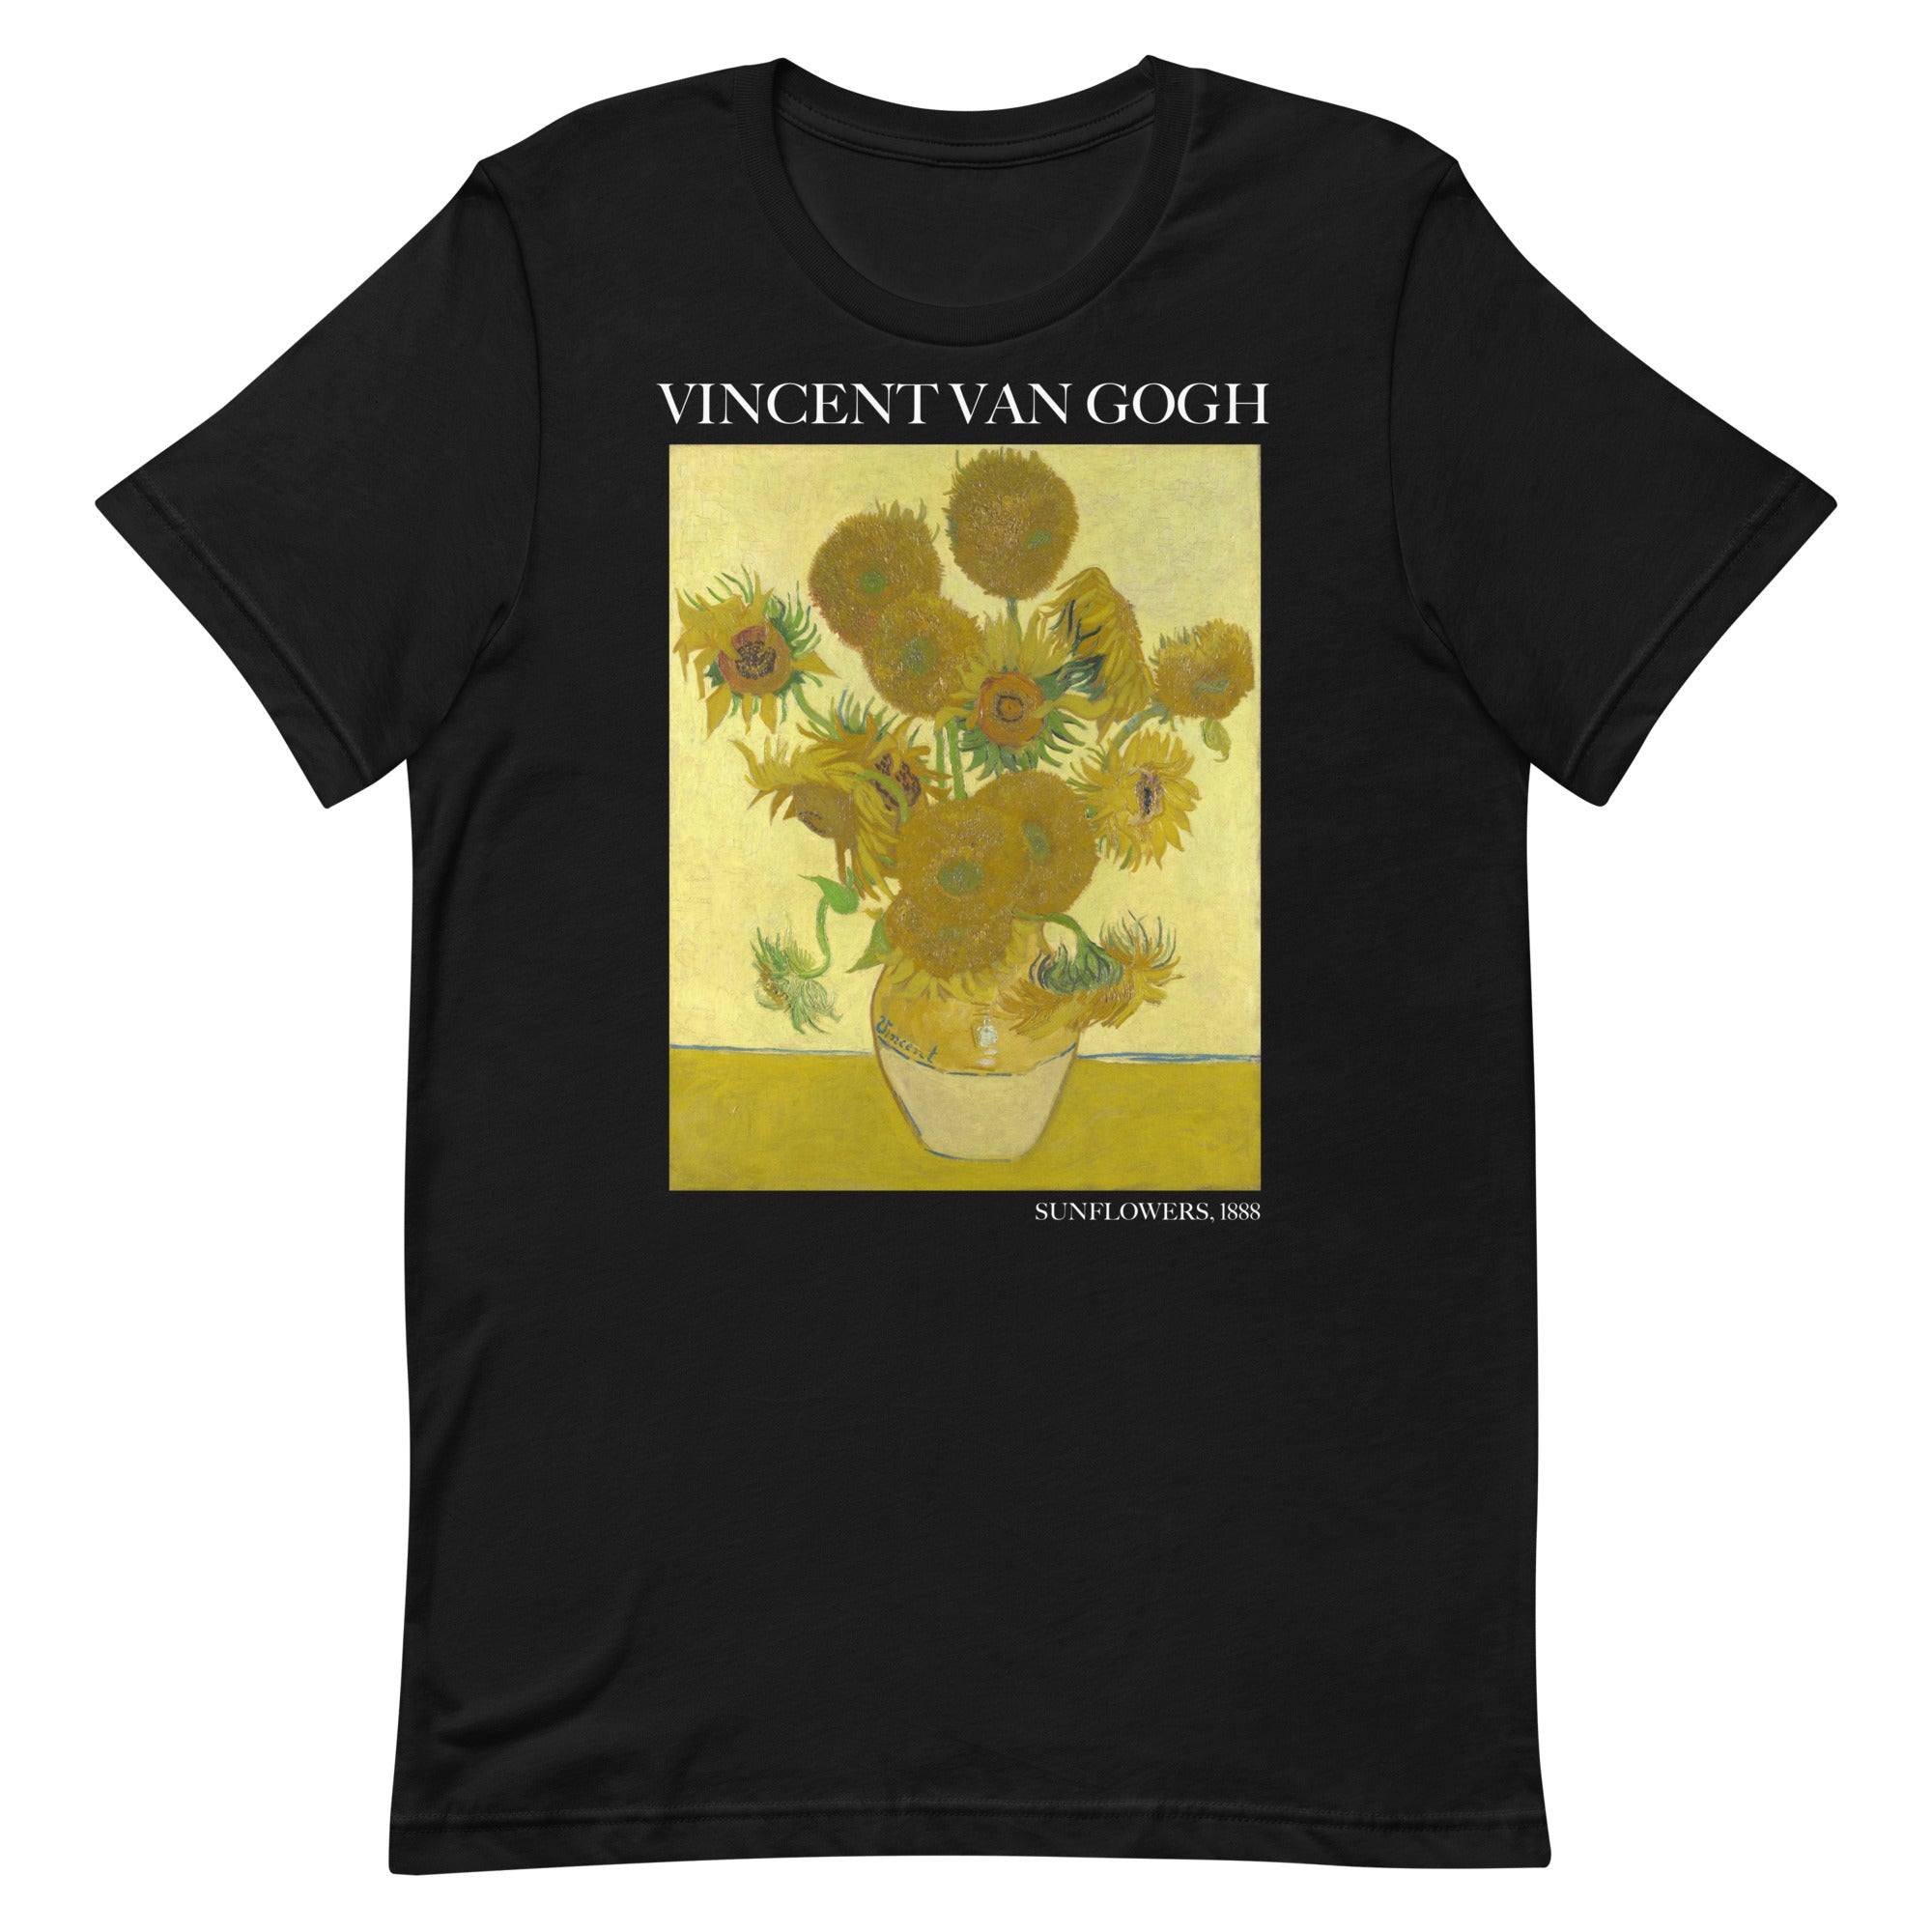 Vincent van Gogh 'Sunflowers' Famous Painting T-Shirt | Unisex Classic Art Tee